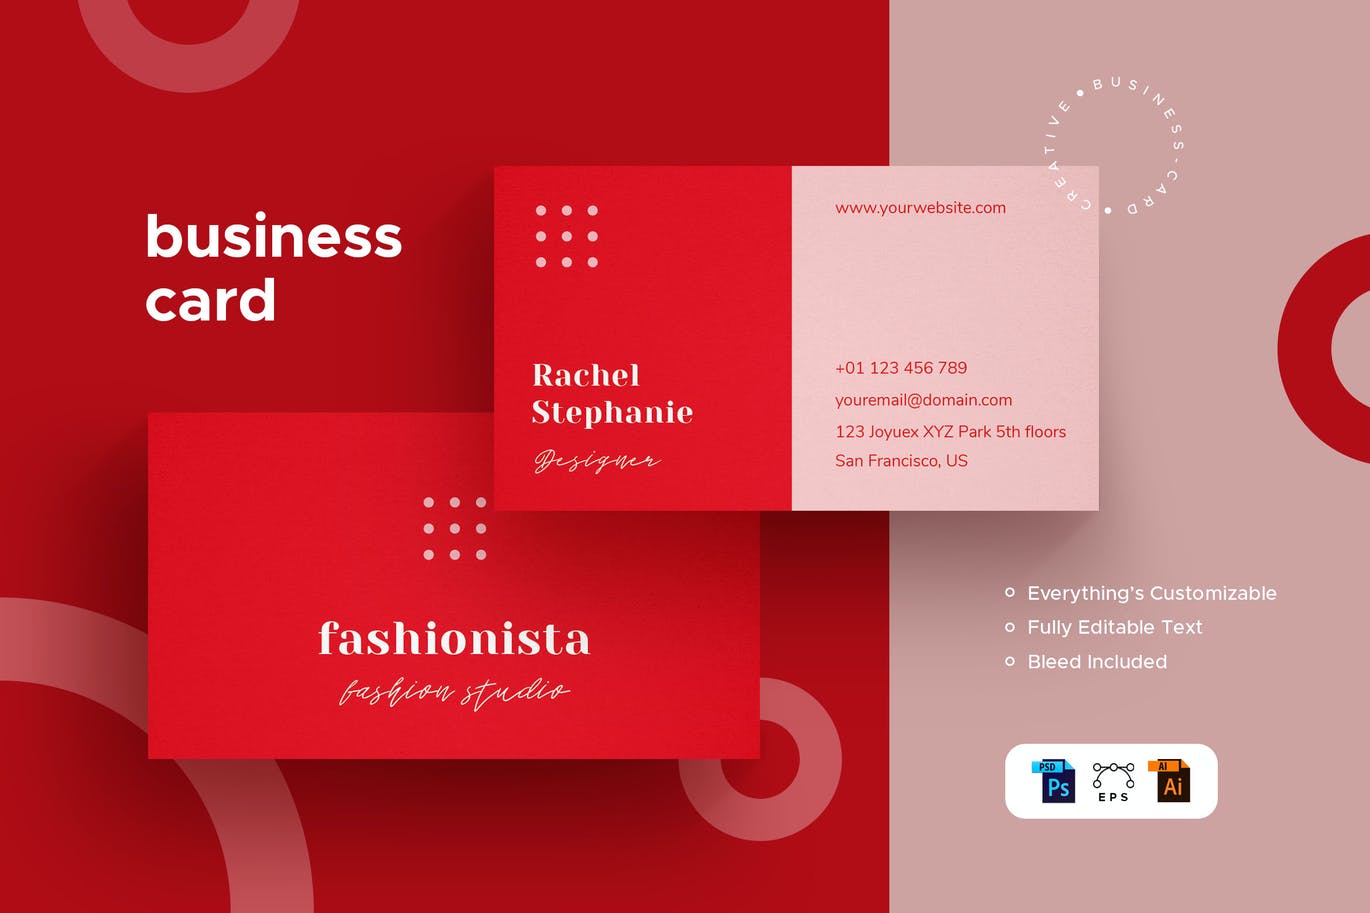 Fashionista - Business Card - Stationery Kit